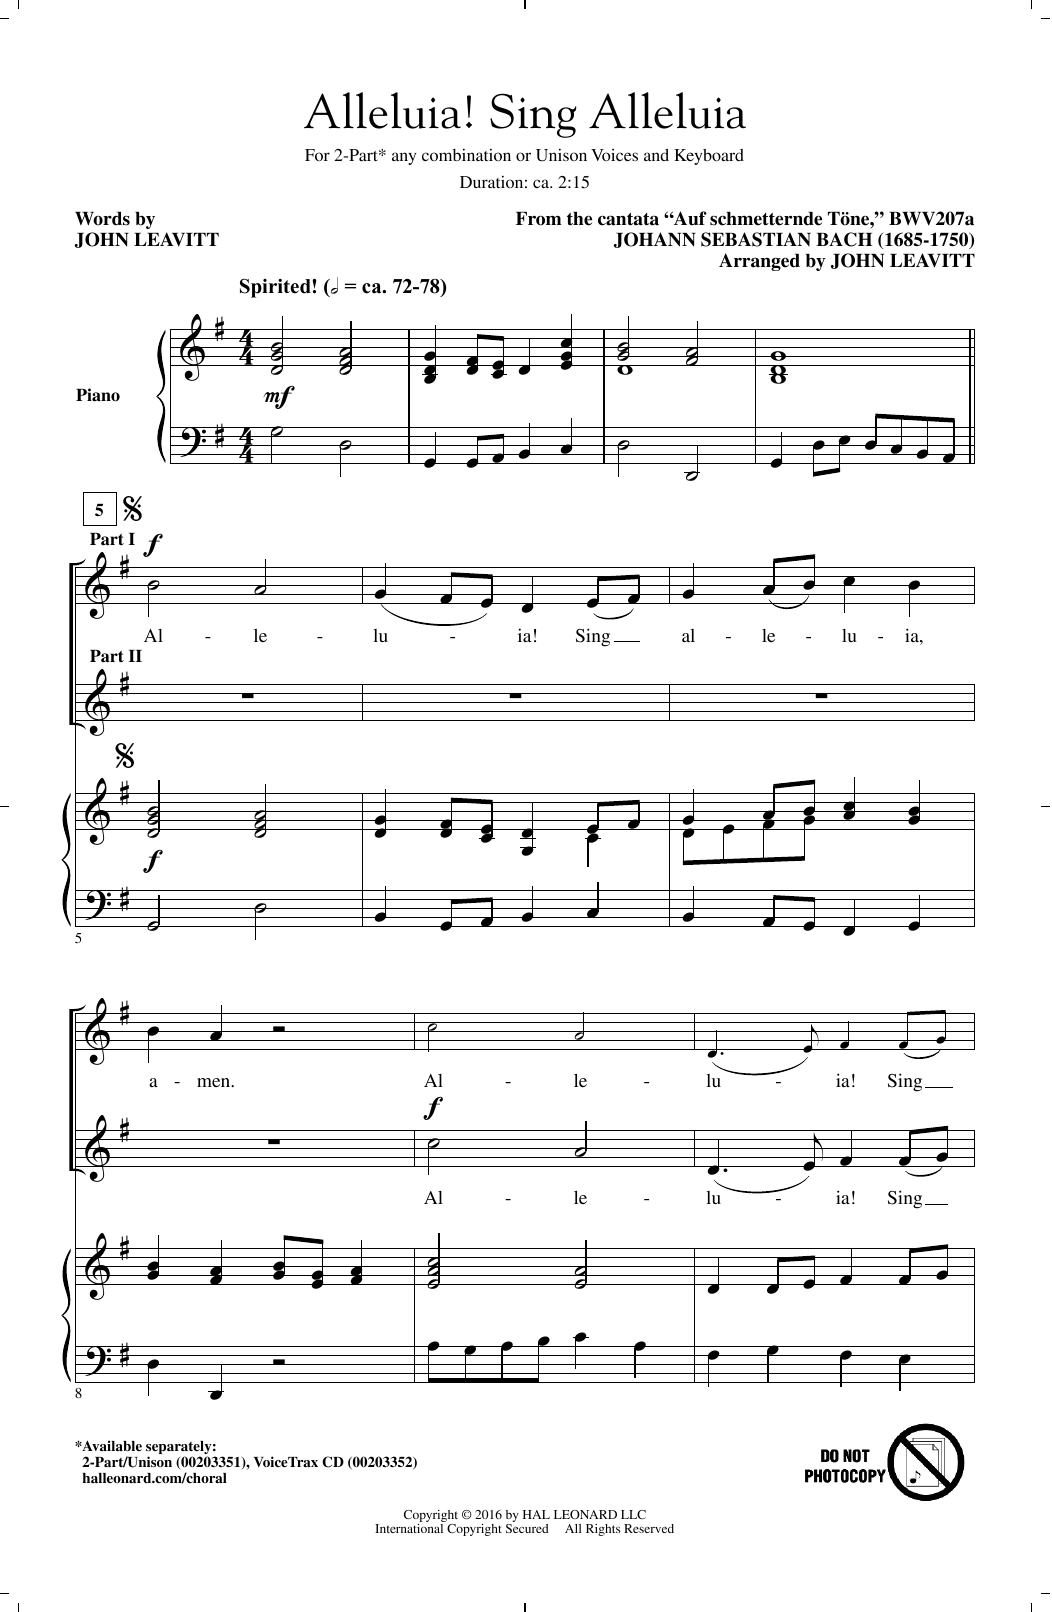 John Leavitt Alleluia! Sing Alleluia Sheet Music Notes & Chords for 2-Part Choir - Download or Print PDF